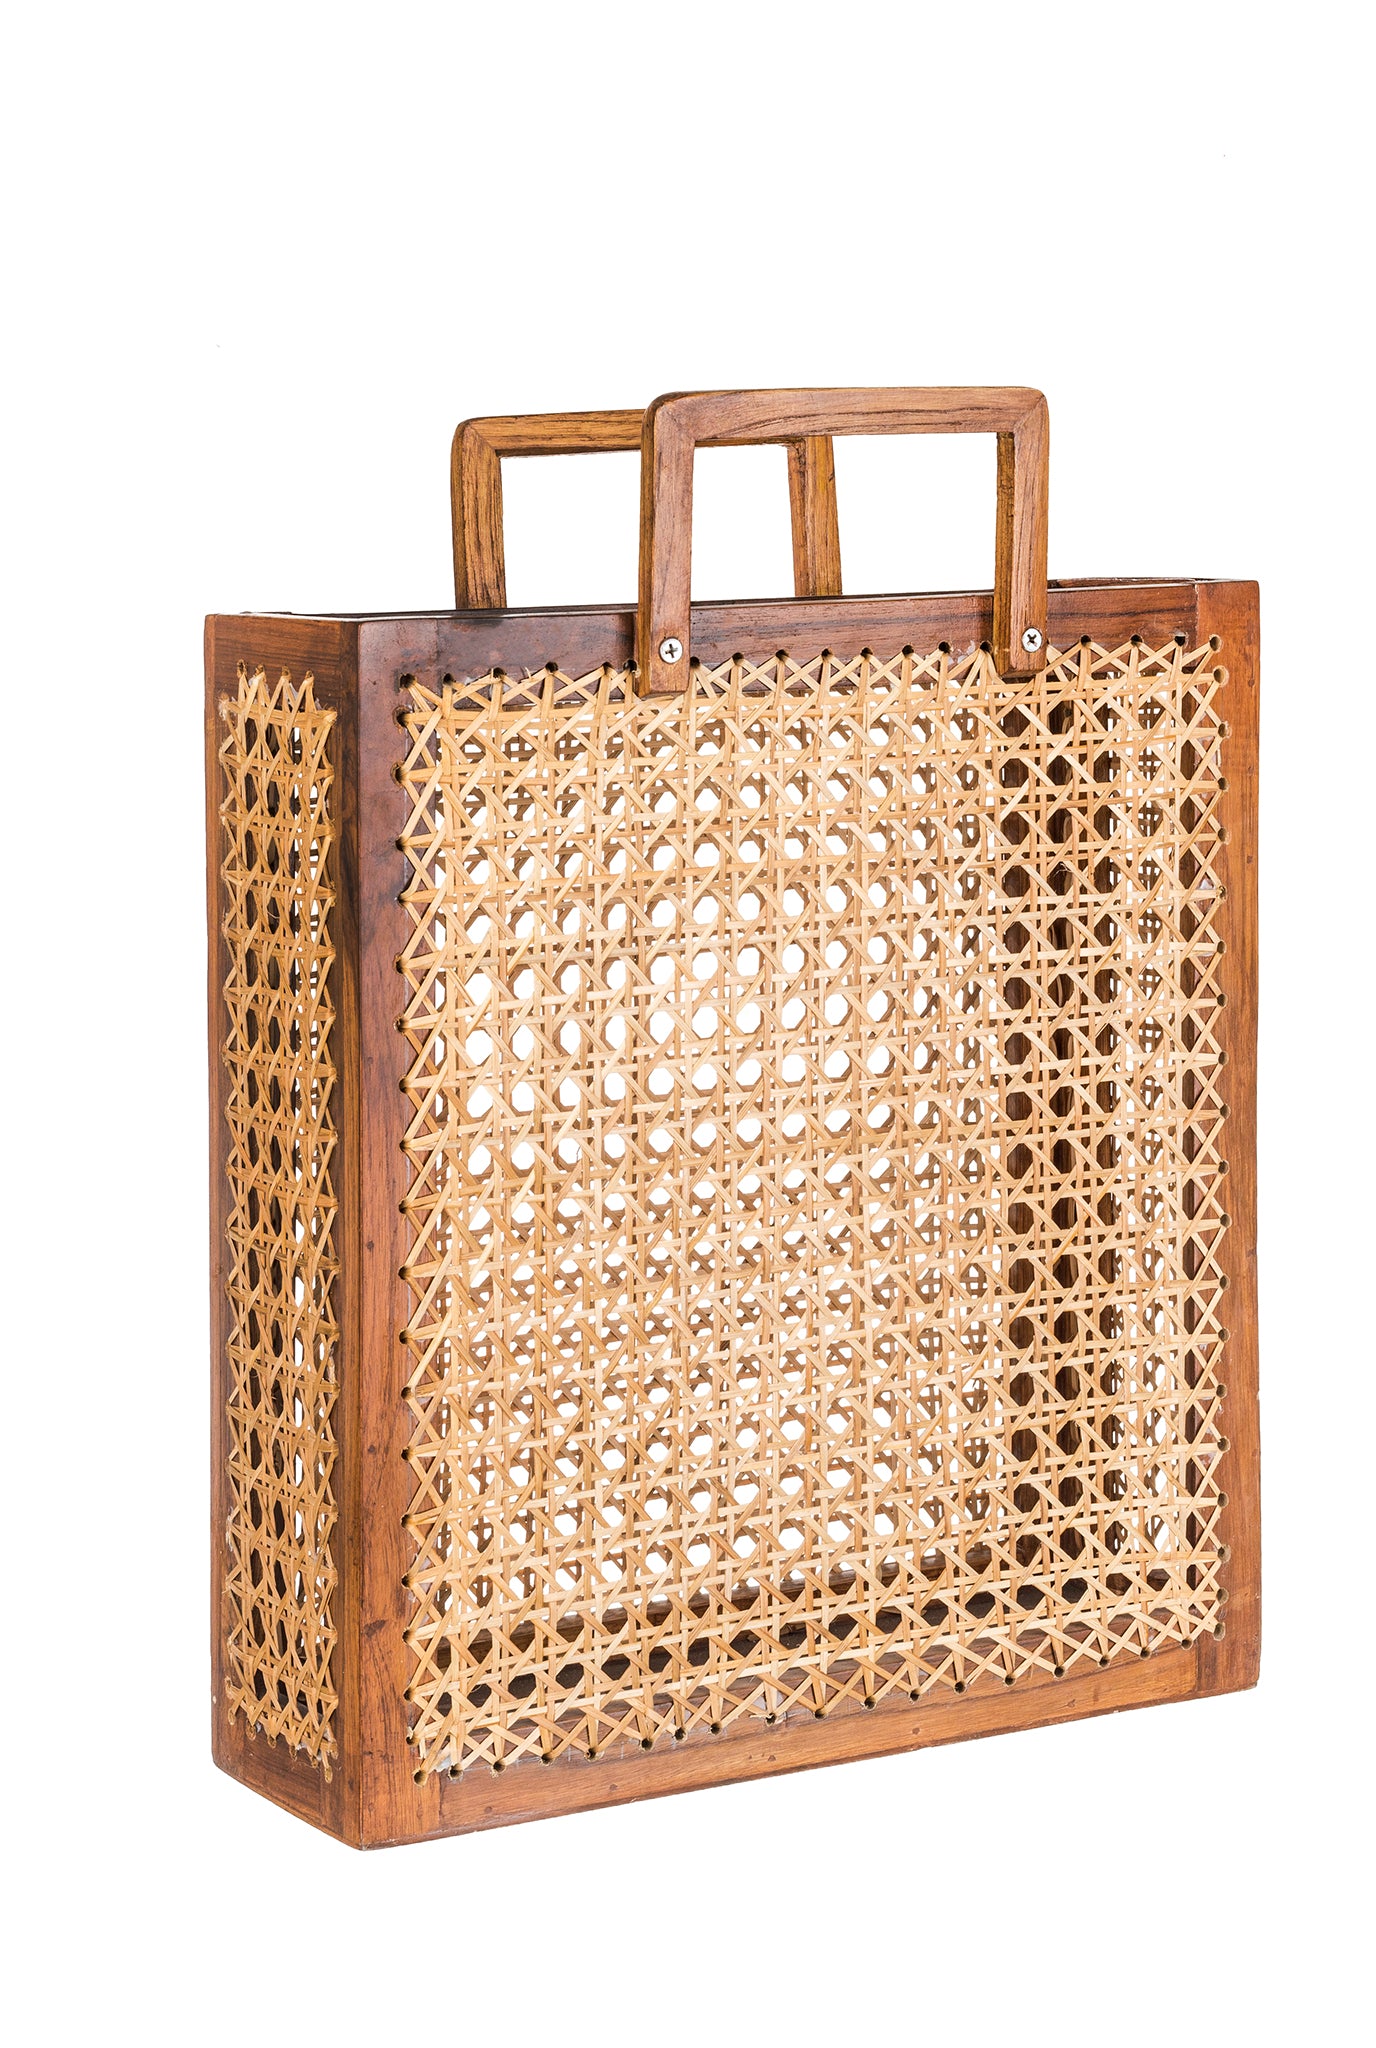 handcrafted- wood frame- cane mesh-rattan work-holder-planter-sustainable-jodi